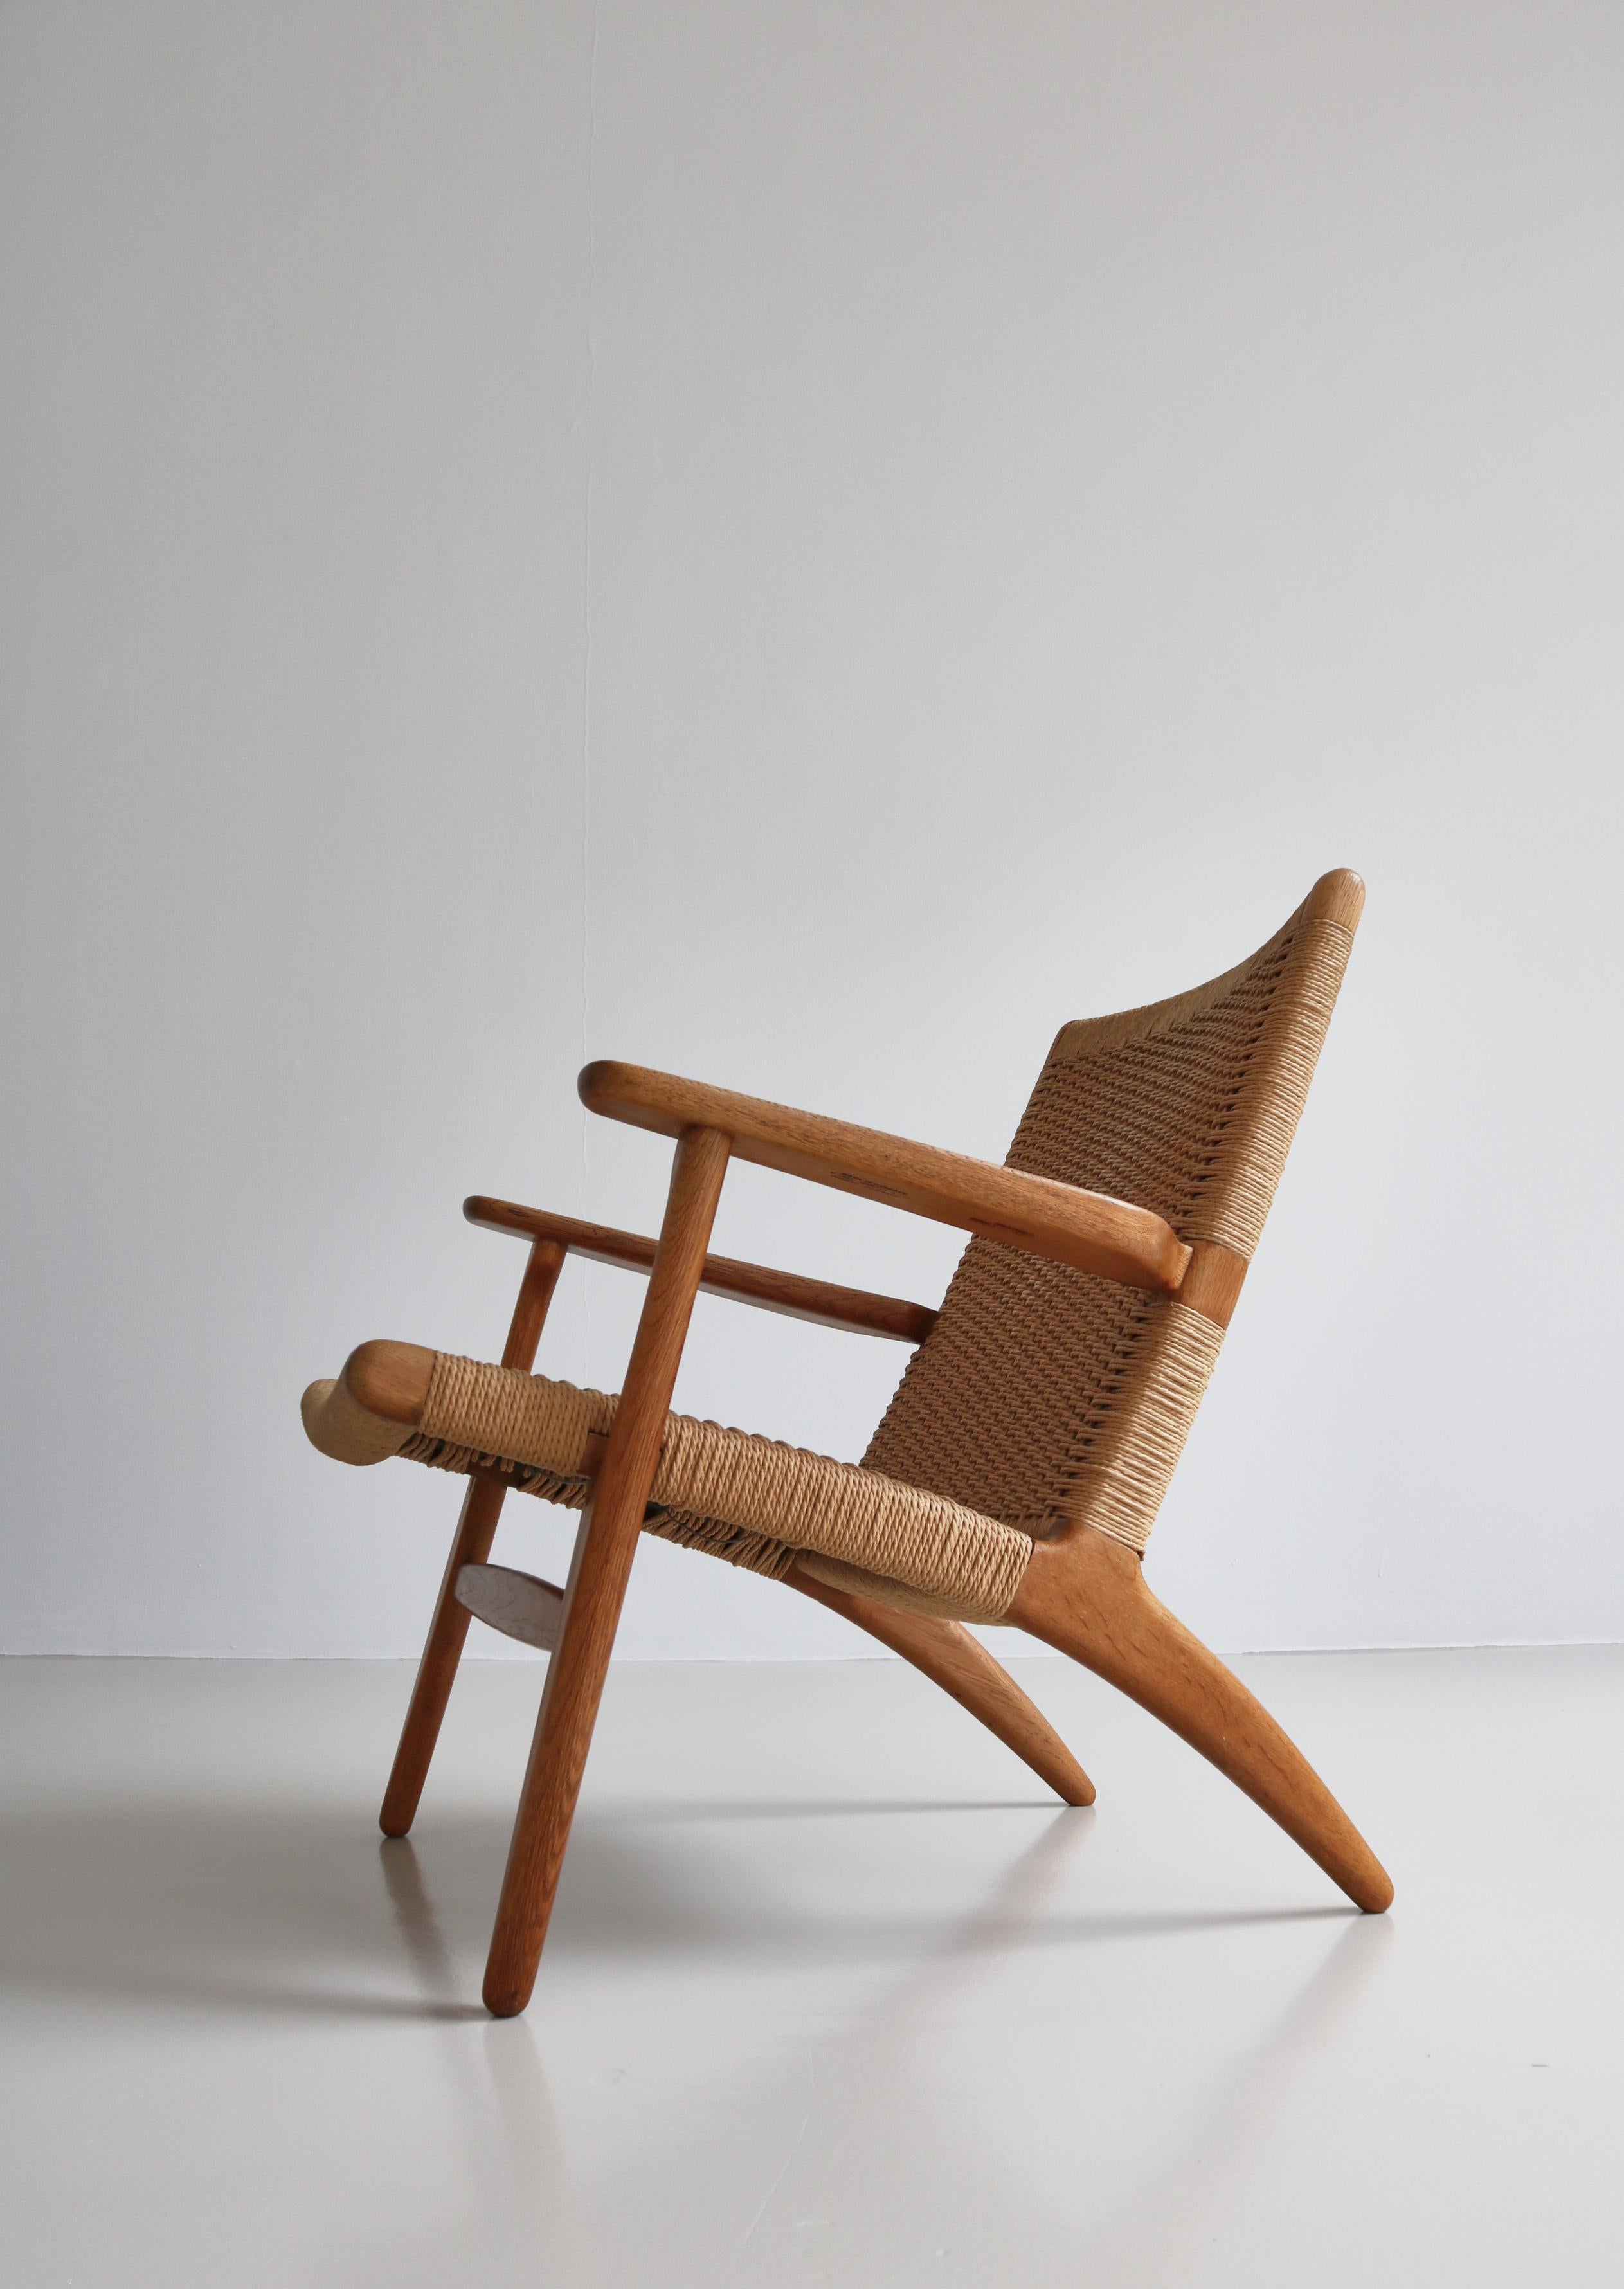 Hans J. Wegner Early Production Lounge Chair model CH25, Denmark, 1950s 2